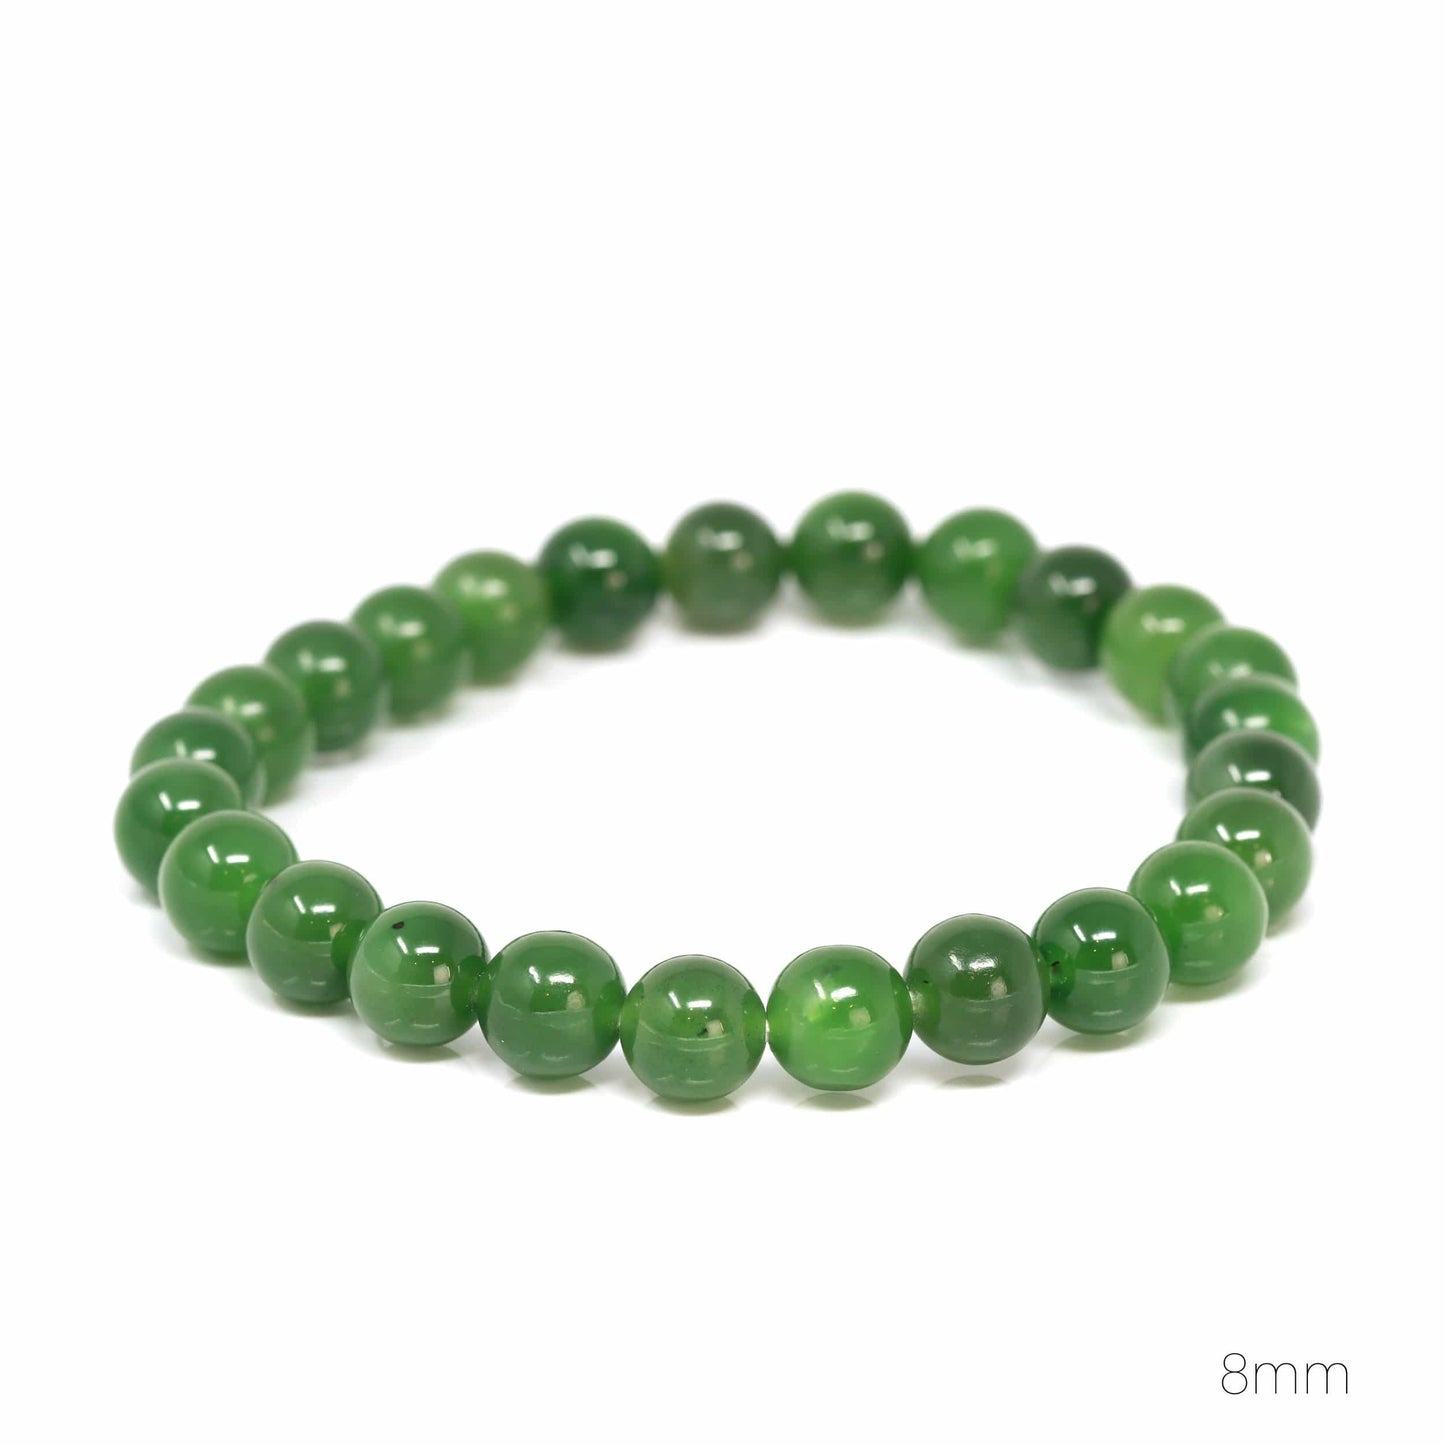 RealJade™ "Classic Bangle" Genuine Burmese High Quality Apple Green Jadeite Jade Bangle Bracelet (53.4mm) #541